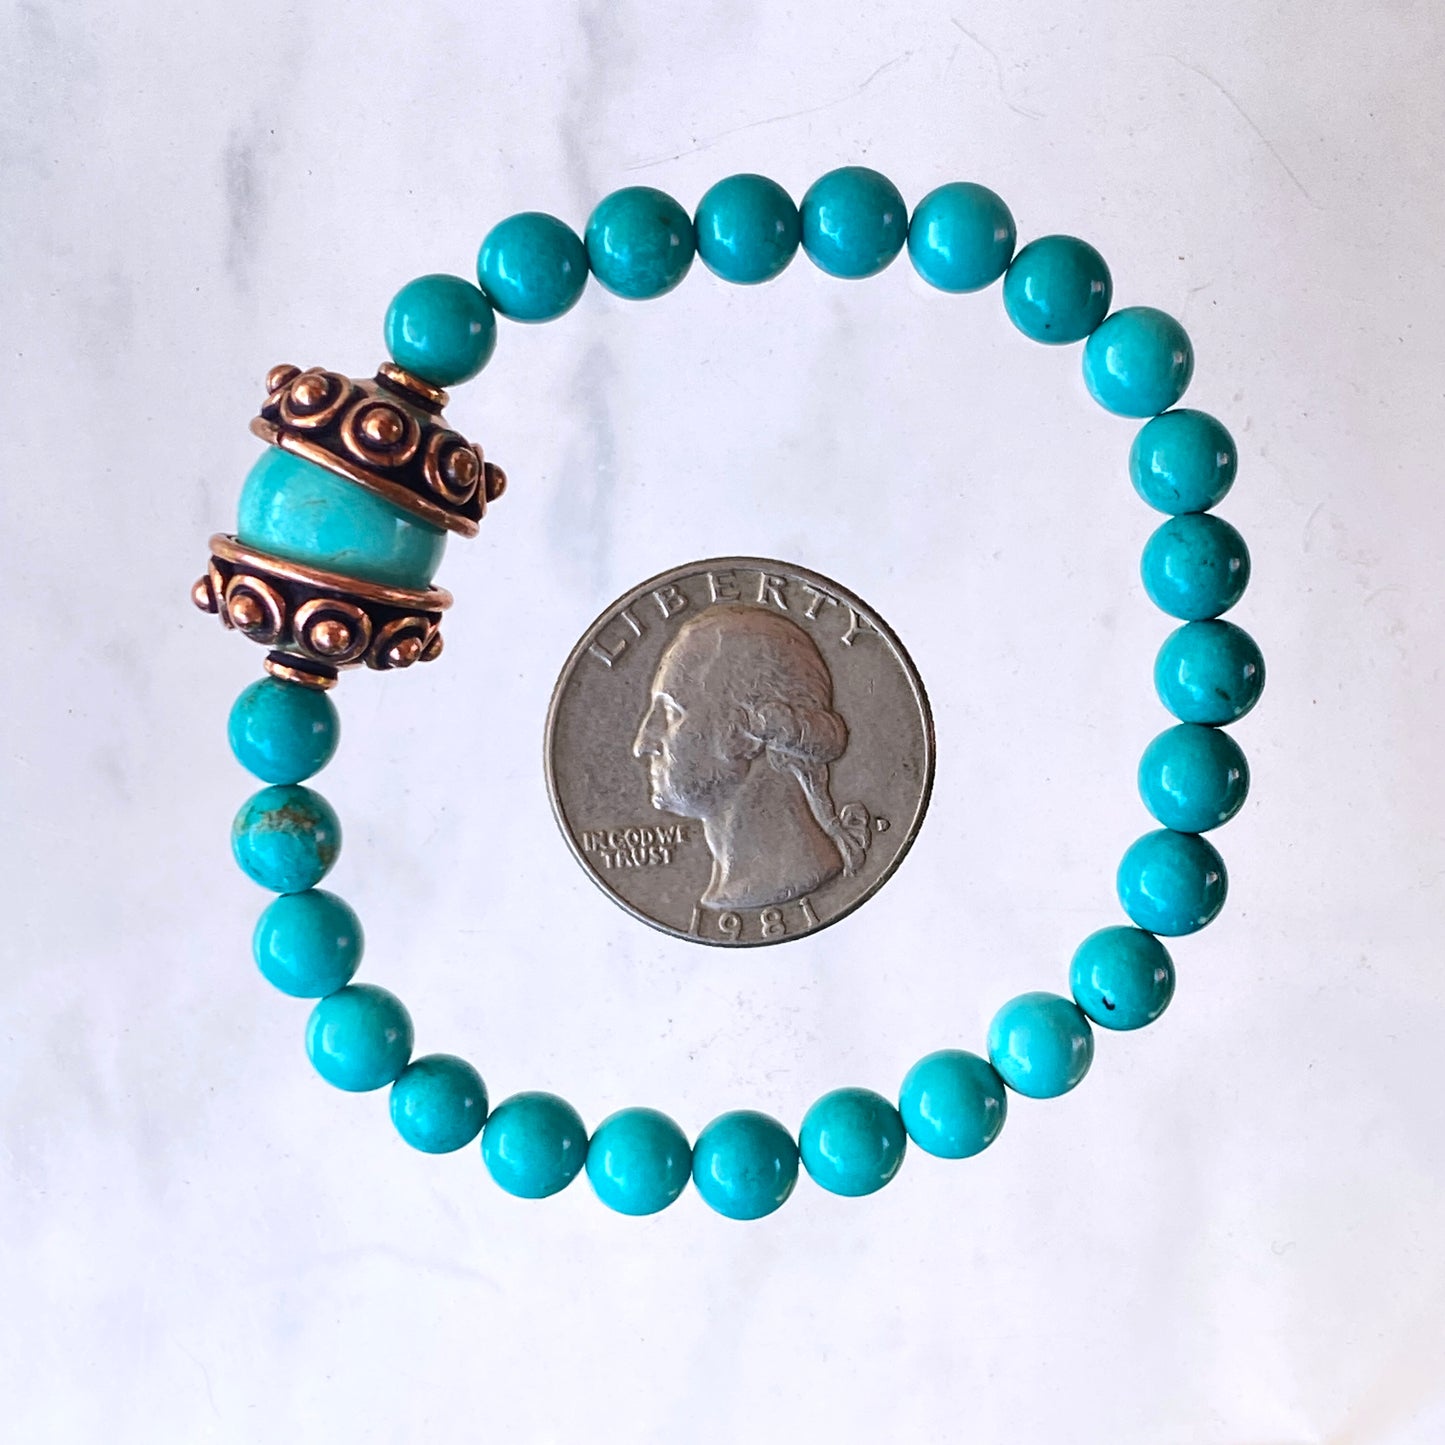 Turquoise gemstones and Copper Flower Beaded Bracelet